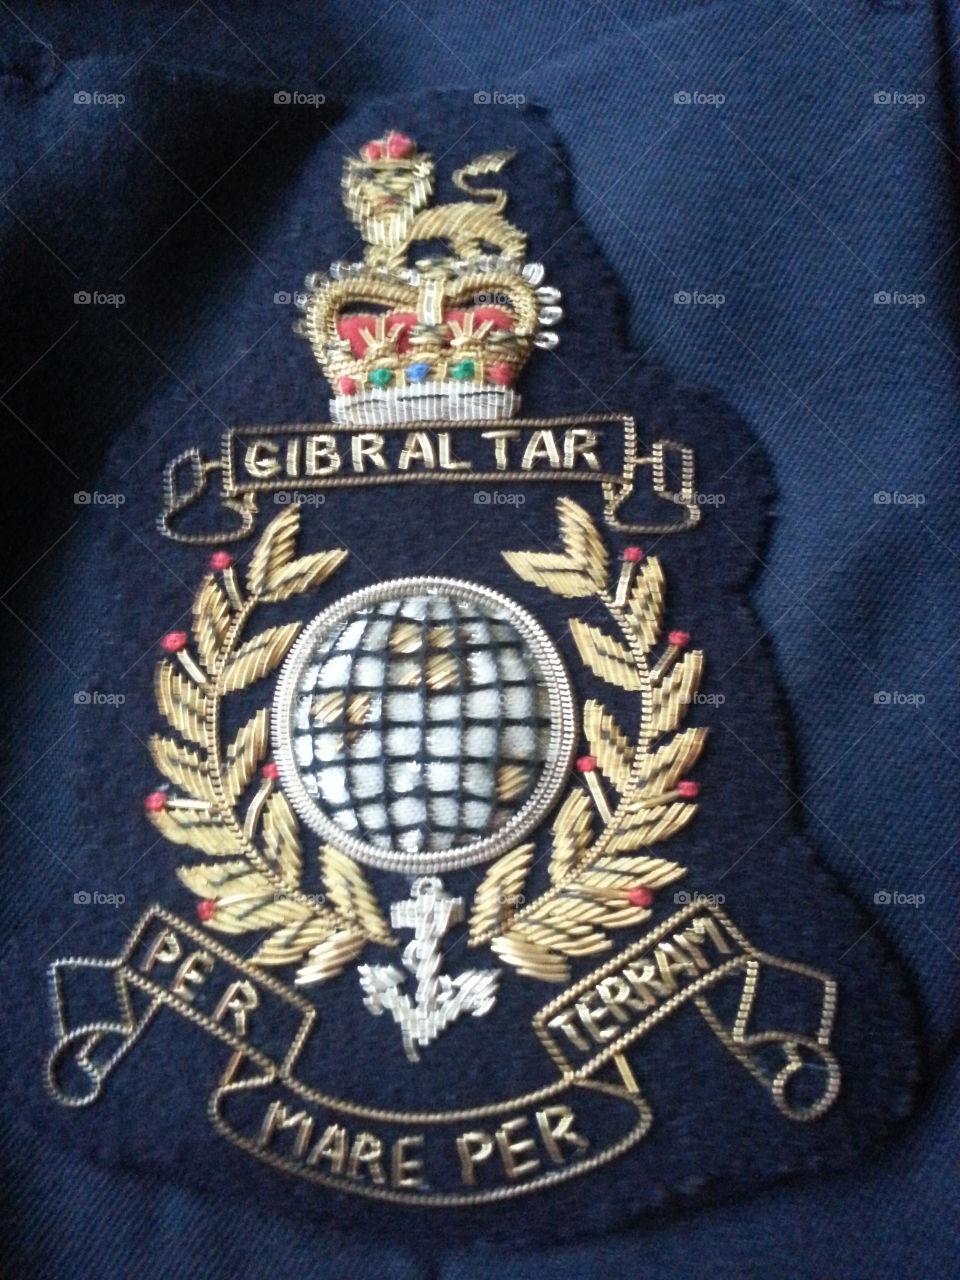 British Royal Marine military patch